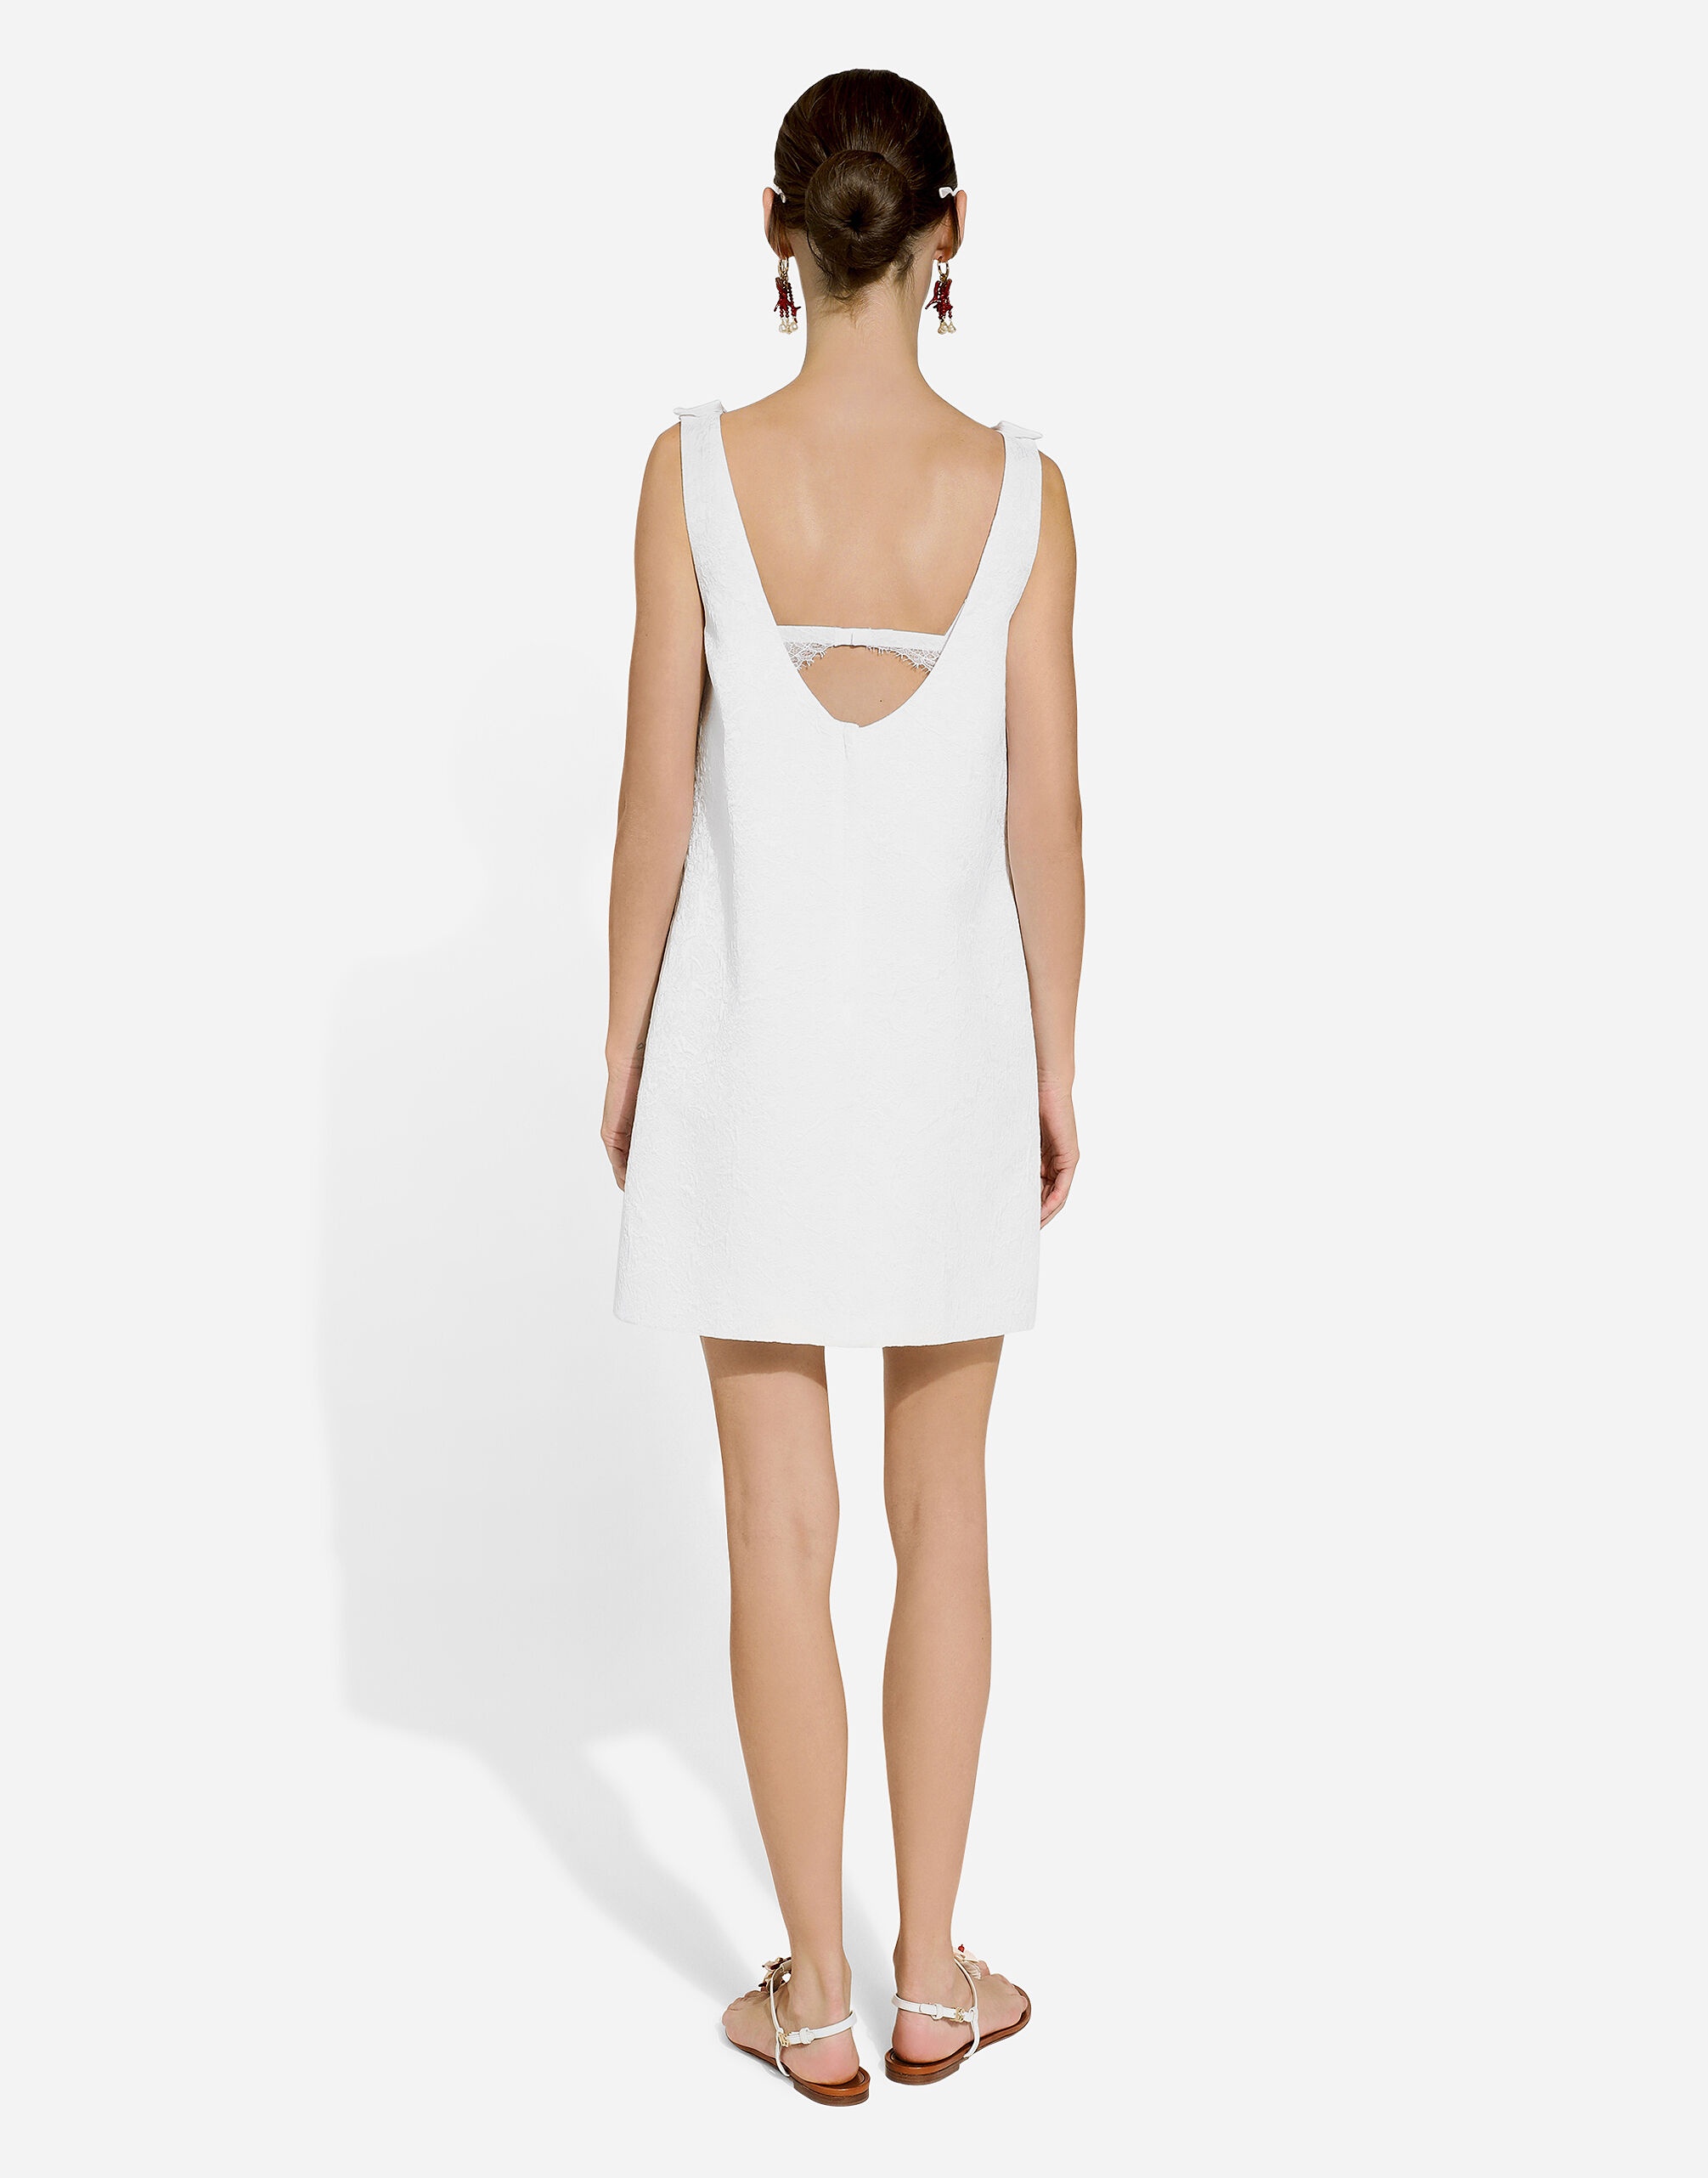 Short brocade dress with back neckline - 3